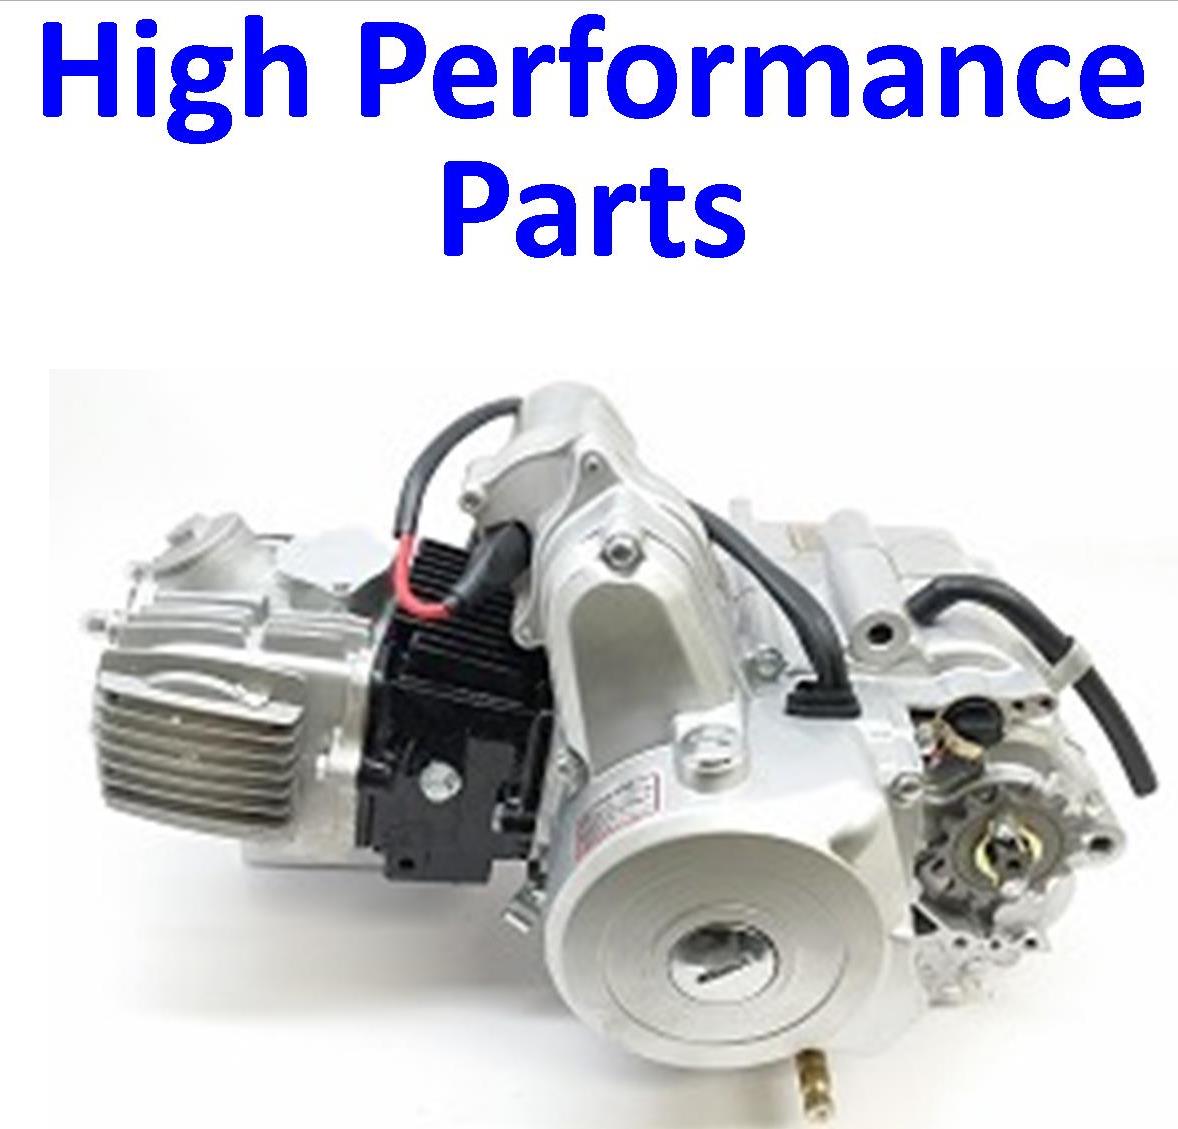 High Performance Parts 49cc-125cc Honda Type Engines